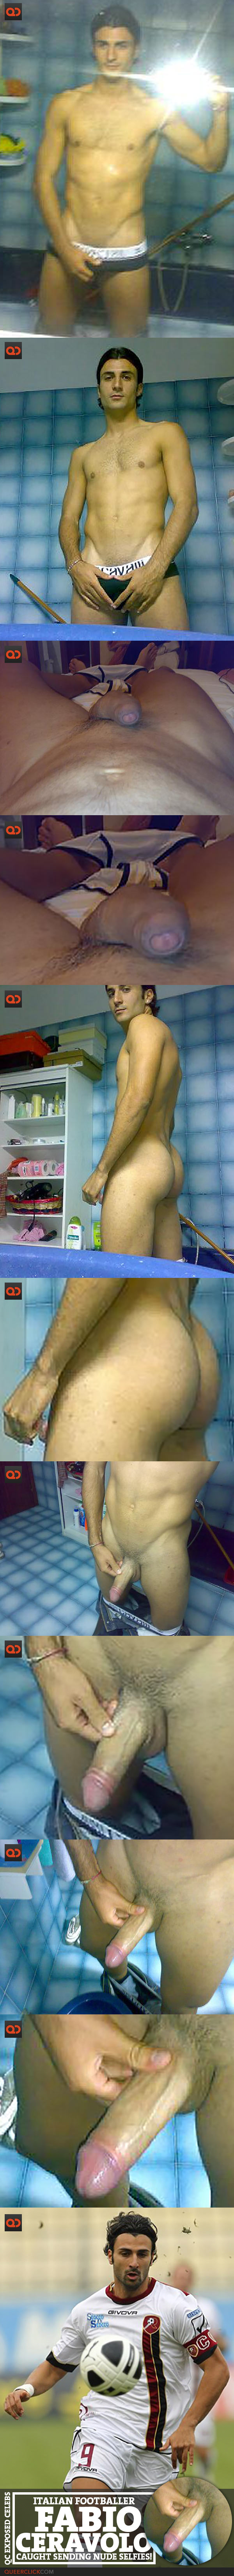 Italian Footballer Fabio Ceravolo Caught Sending Nude Selfies!